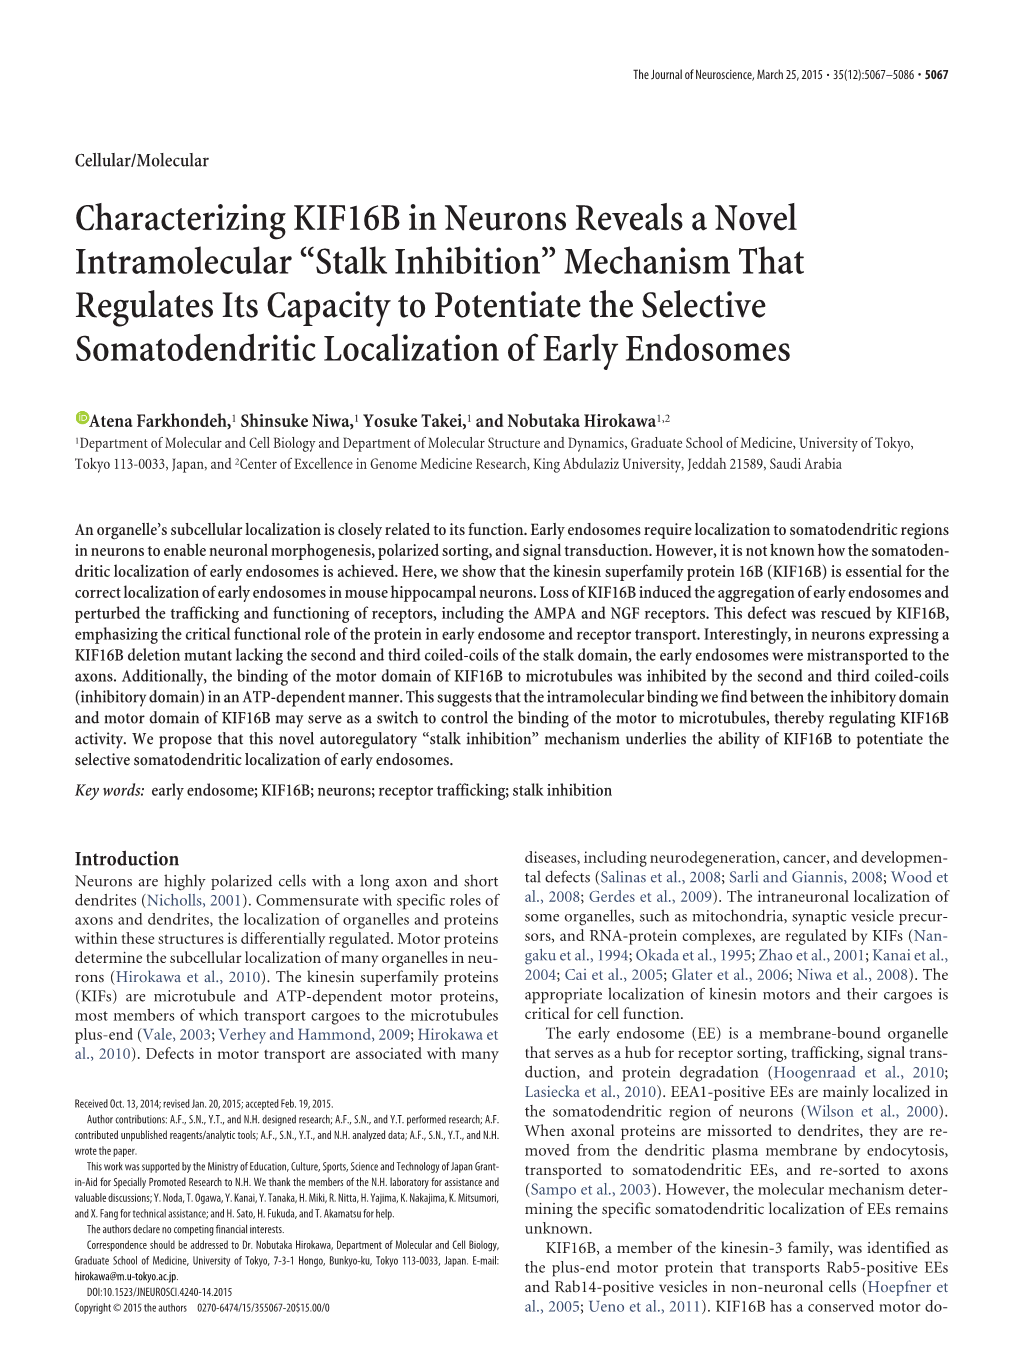 Characterizing KIF16B in Neurons Reveals